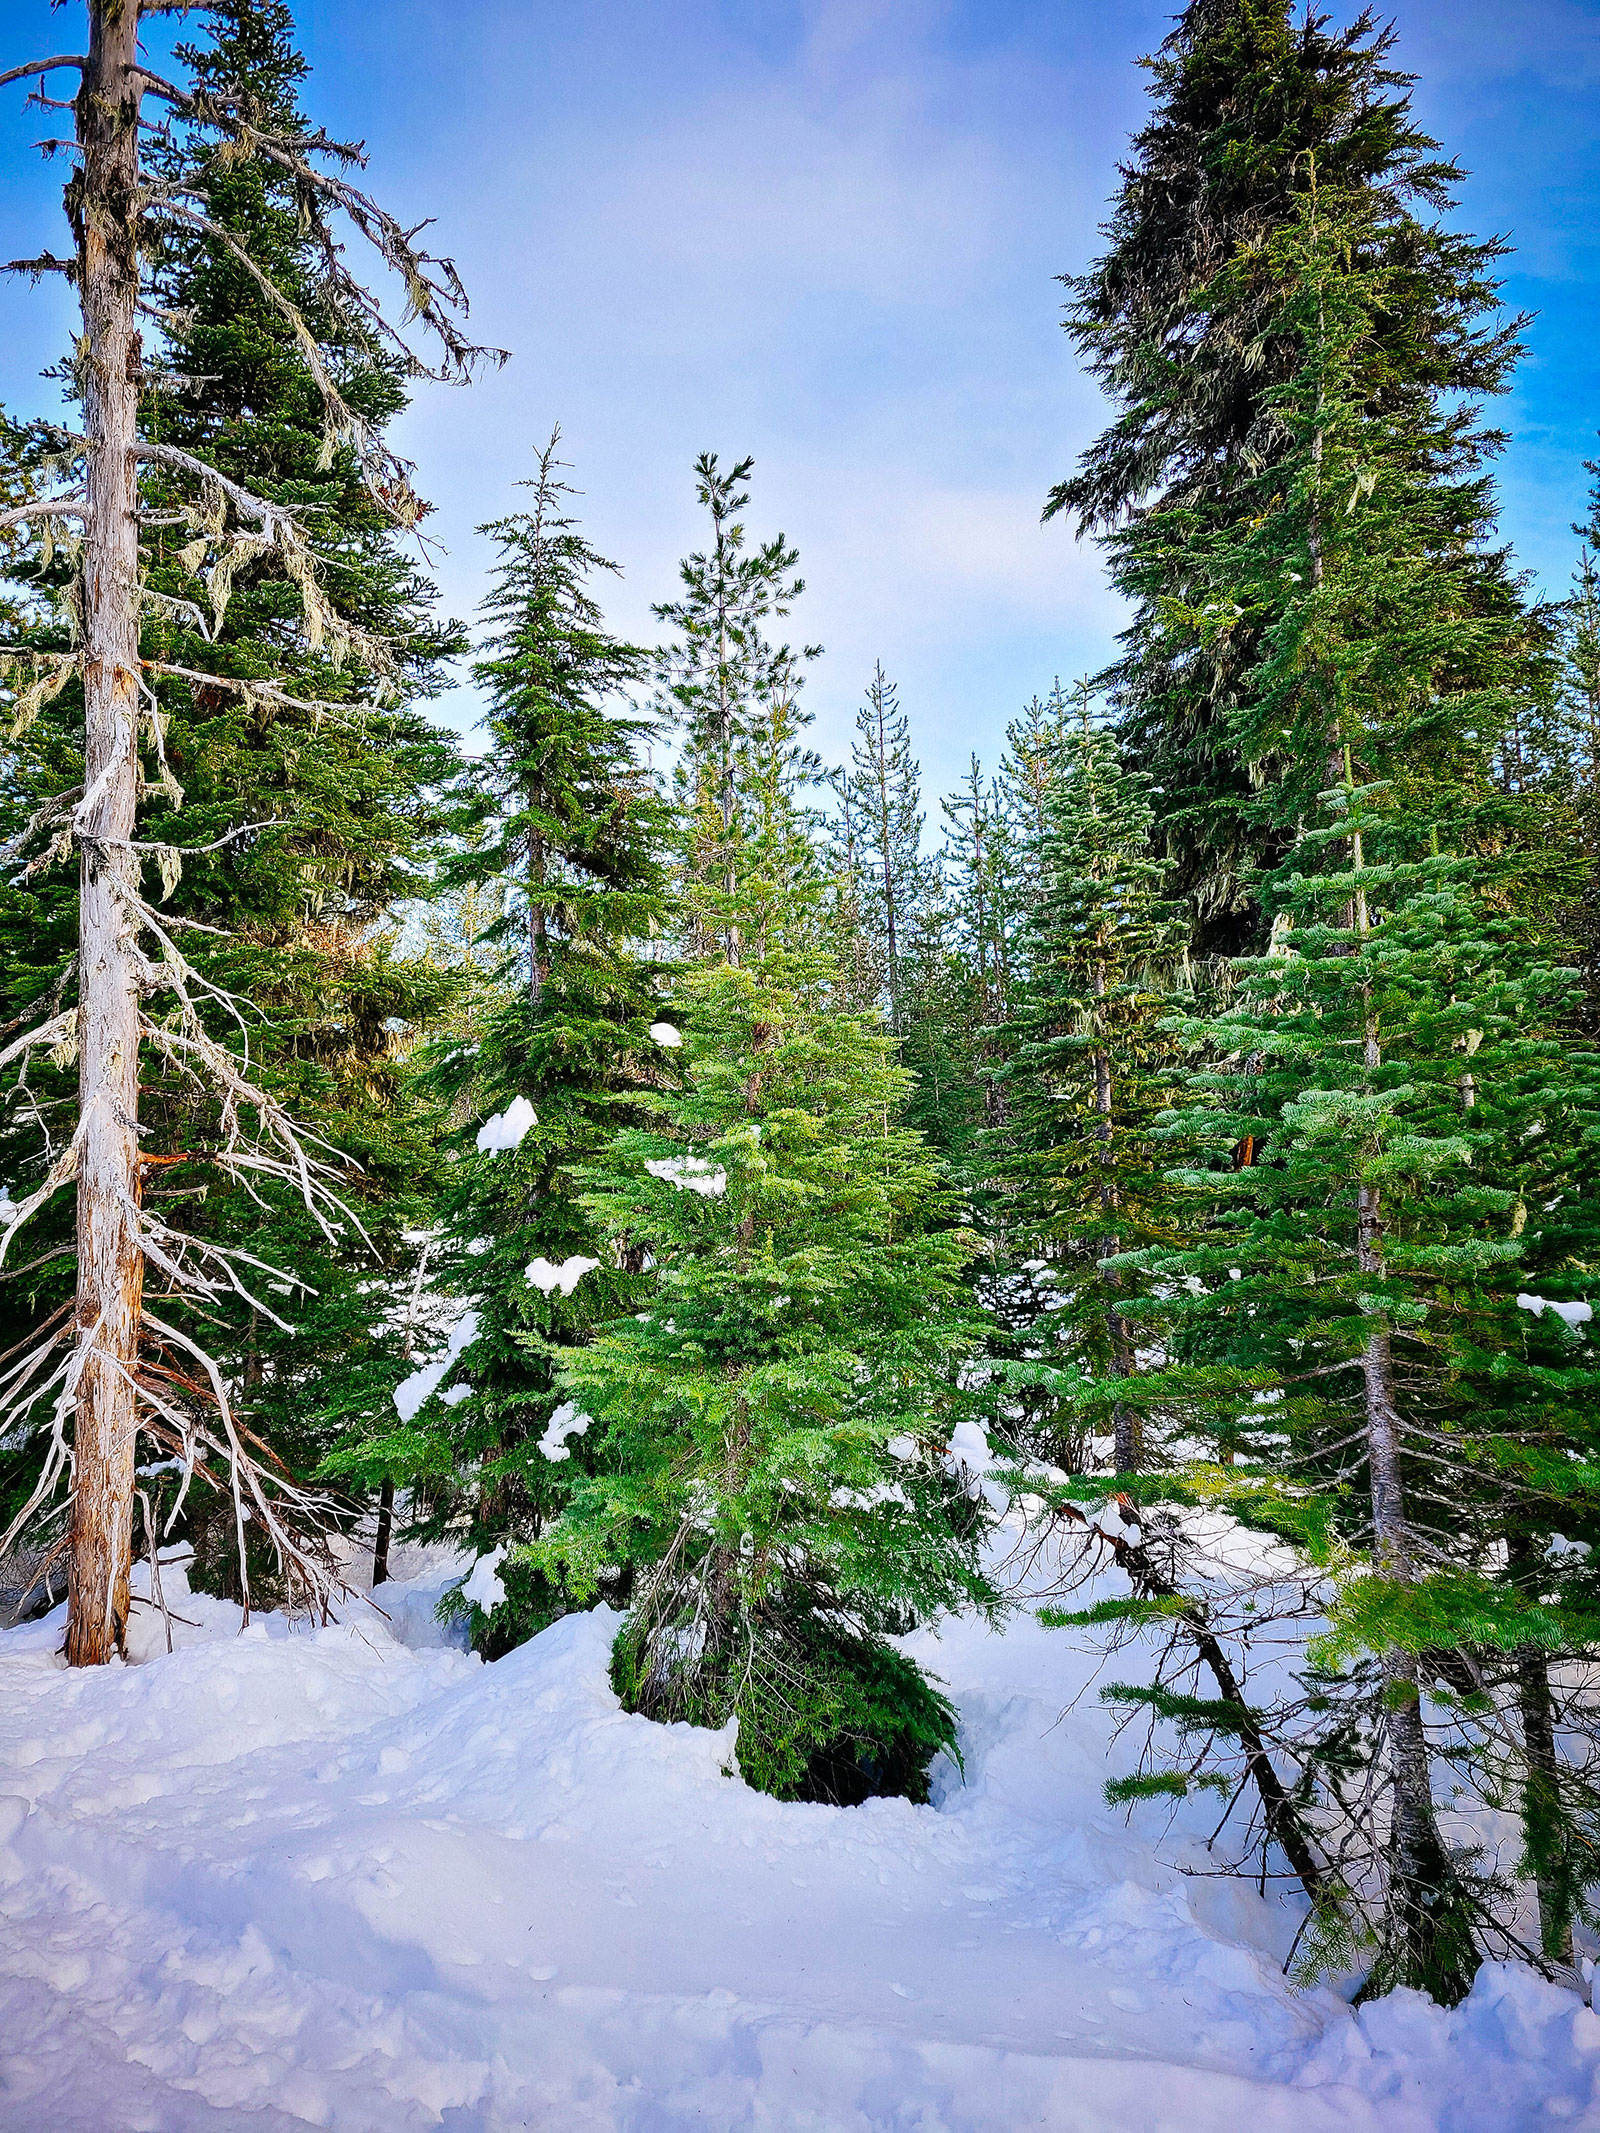 A fir tree in Deschutes National Forest during a snowy winter